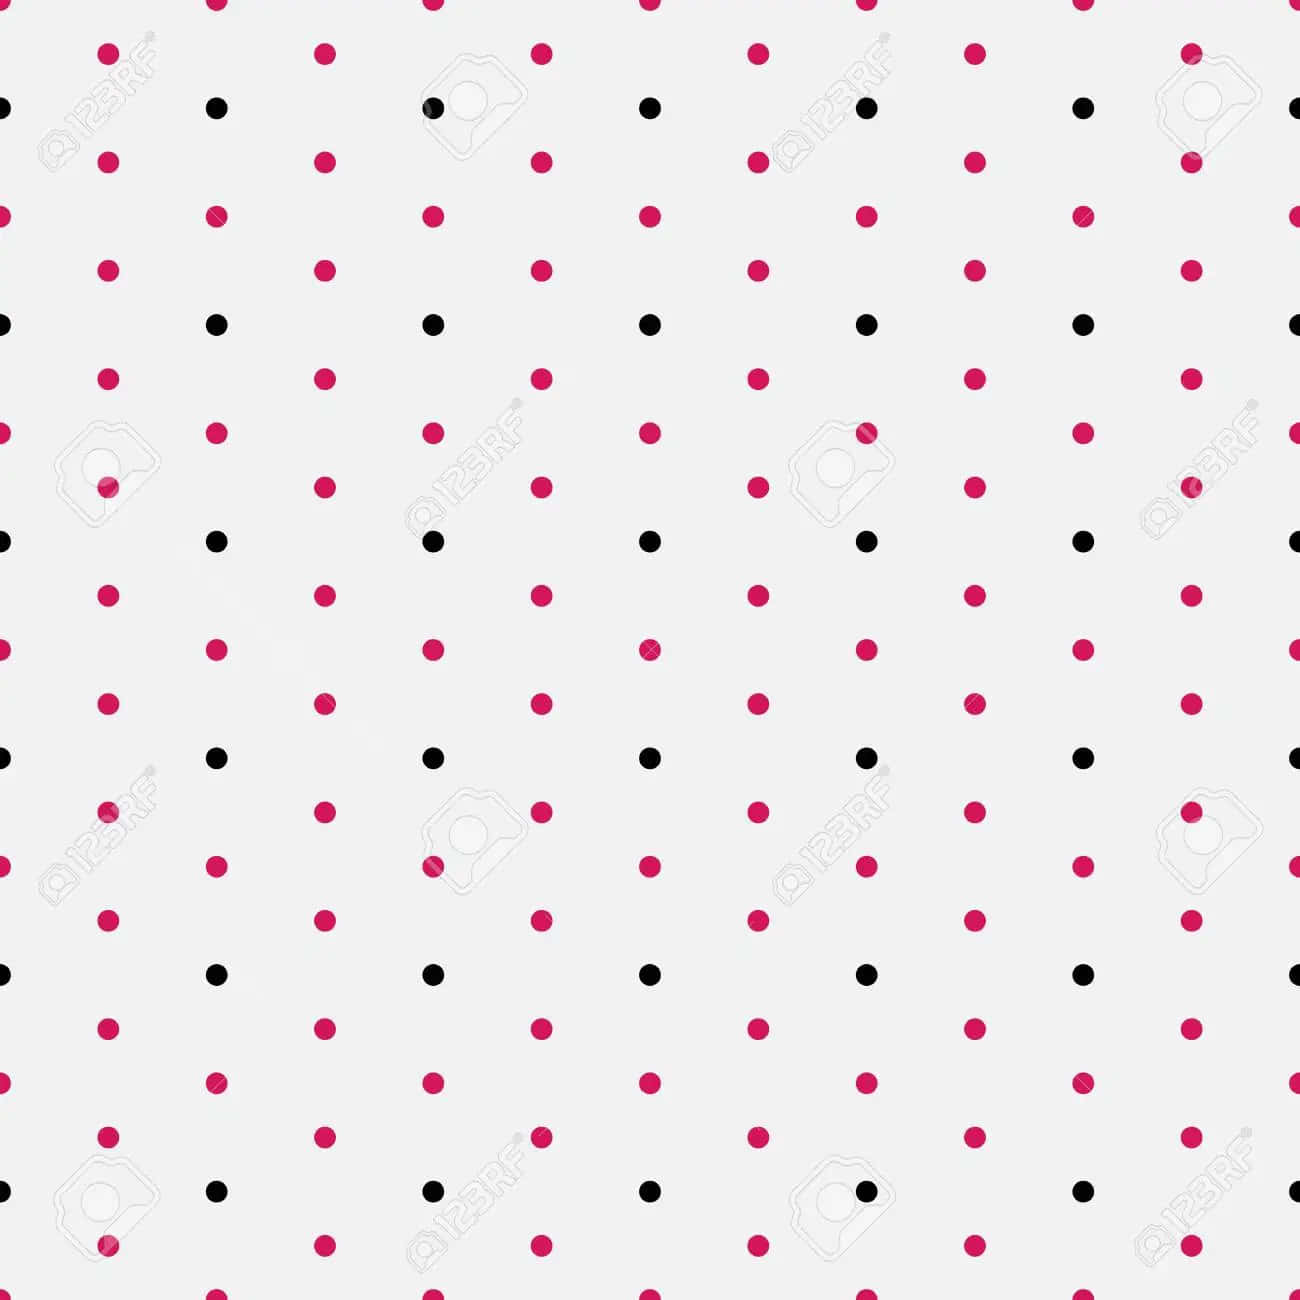 Fun and Fabulous Polka Dots Wallpaper